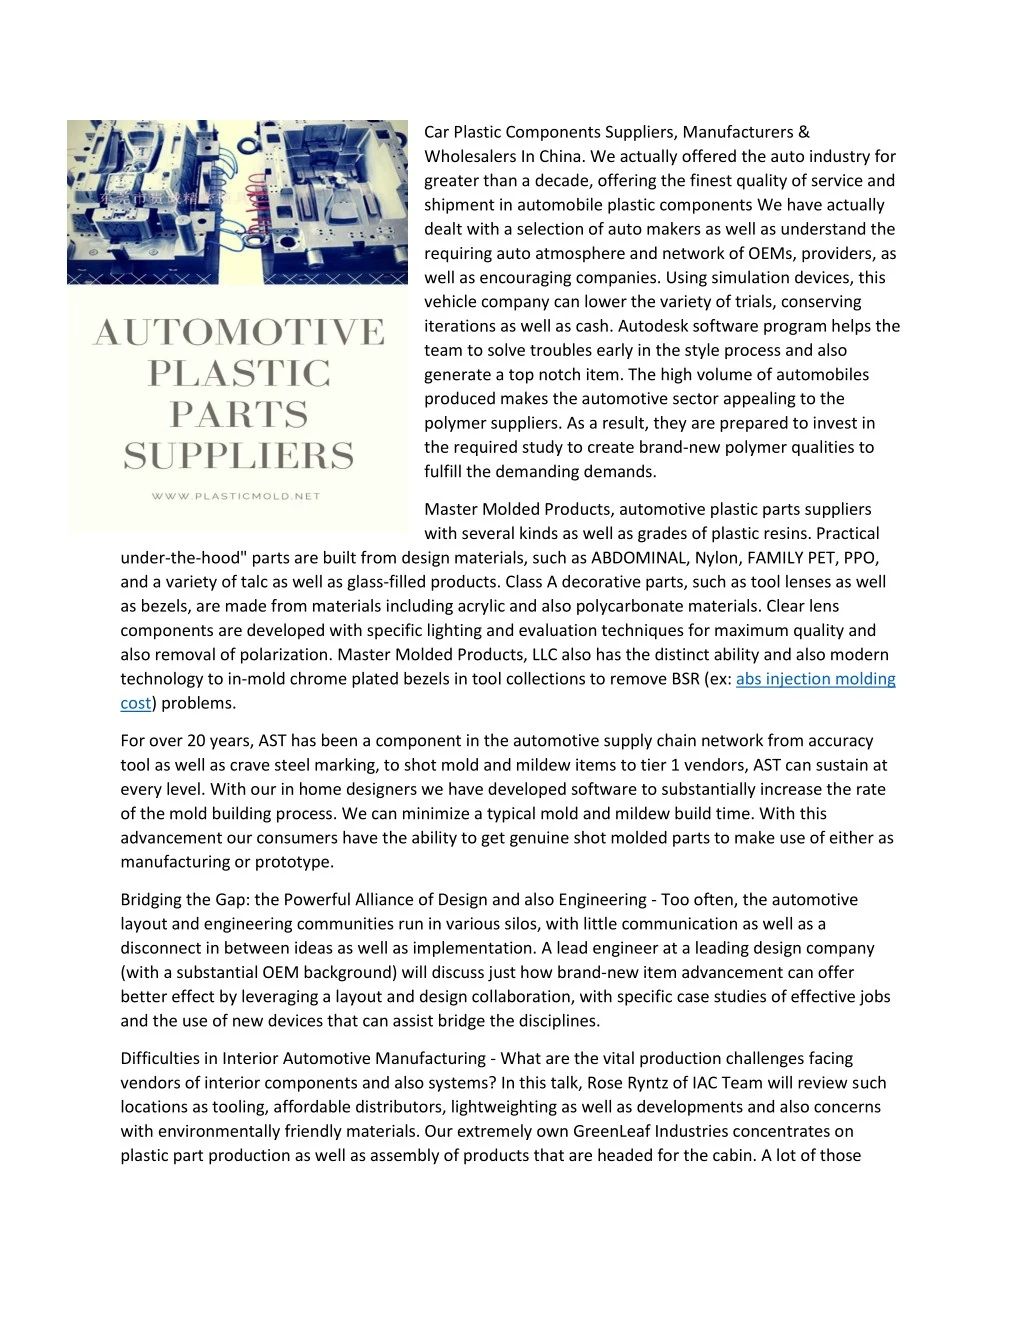 car plastic components suppliers manufacturers